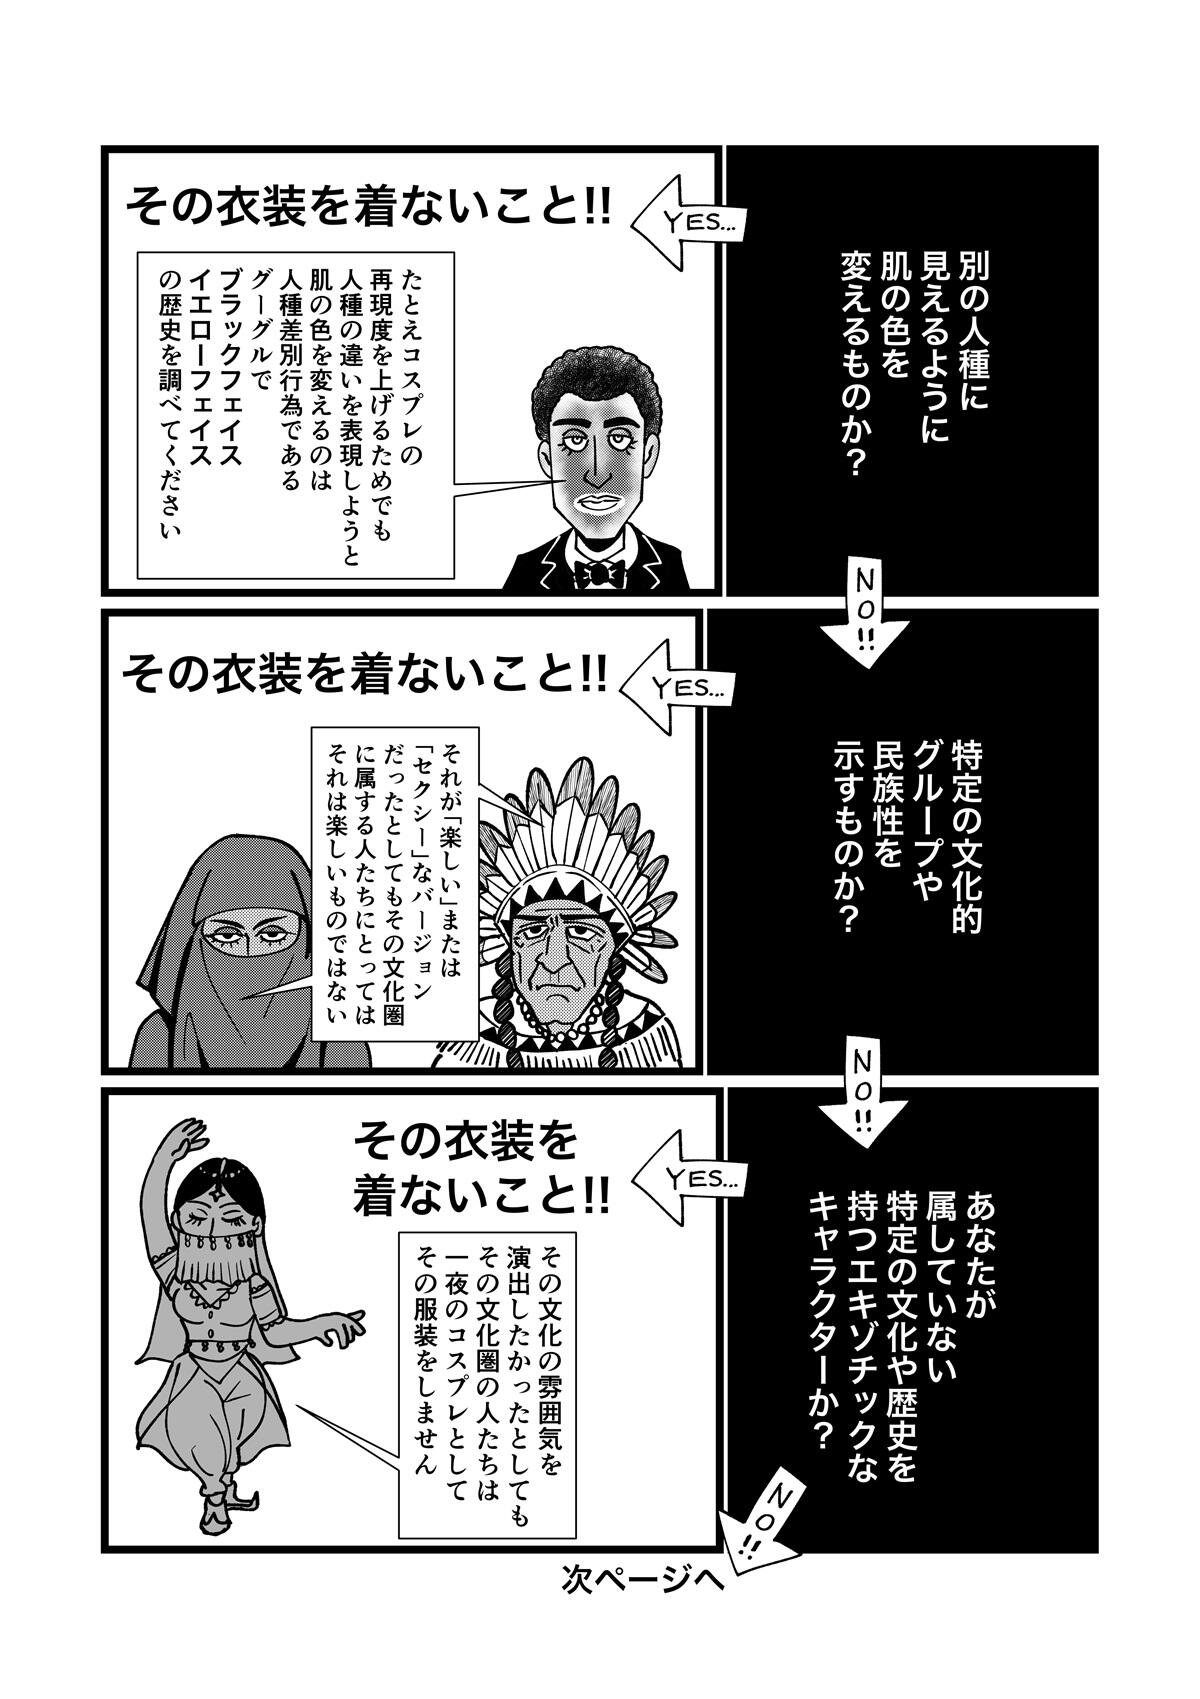 https://www.ryugaku.co.jp/column/images/jawamura25_3_1200.jpg